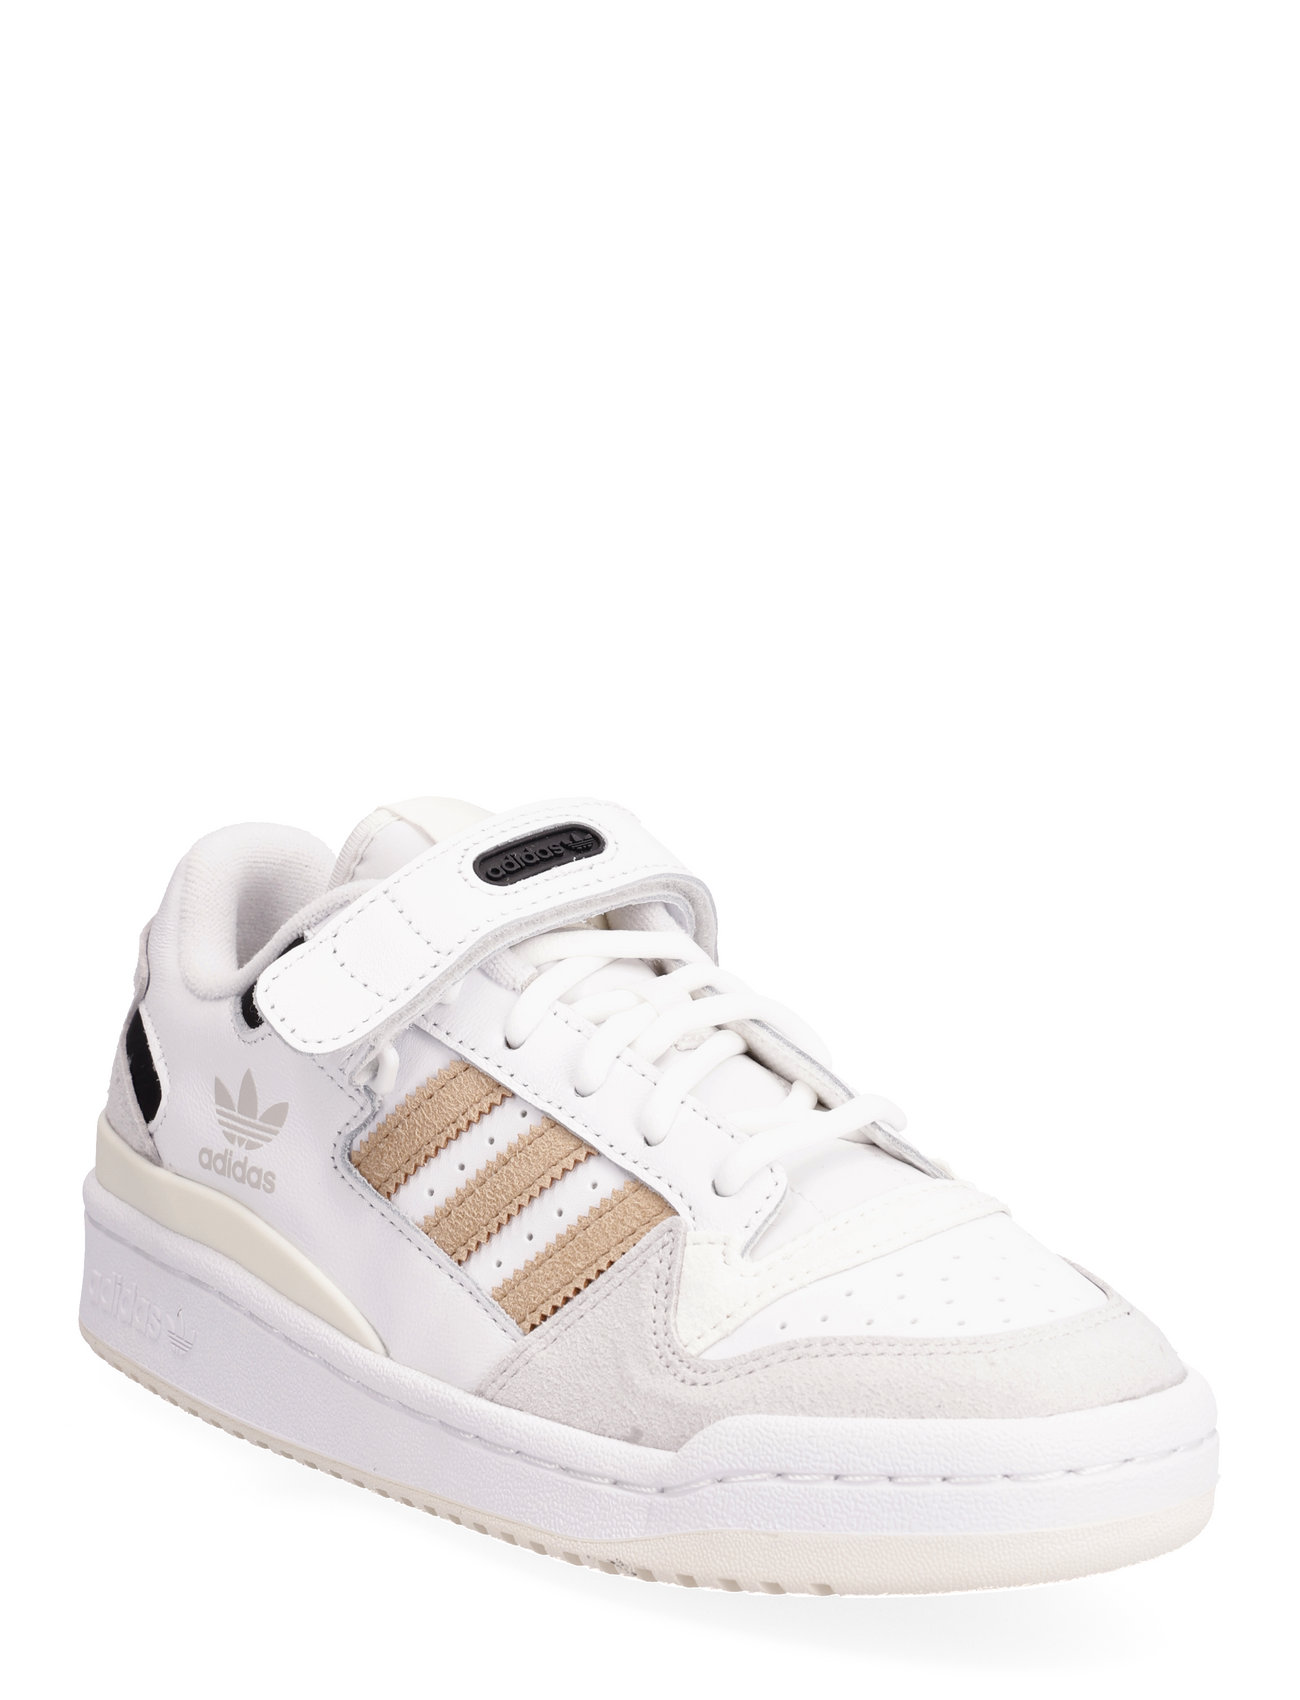 Originals shop – Forum – Booztlet at adidas sneakers Shoes Low